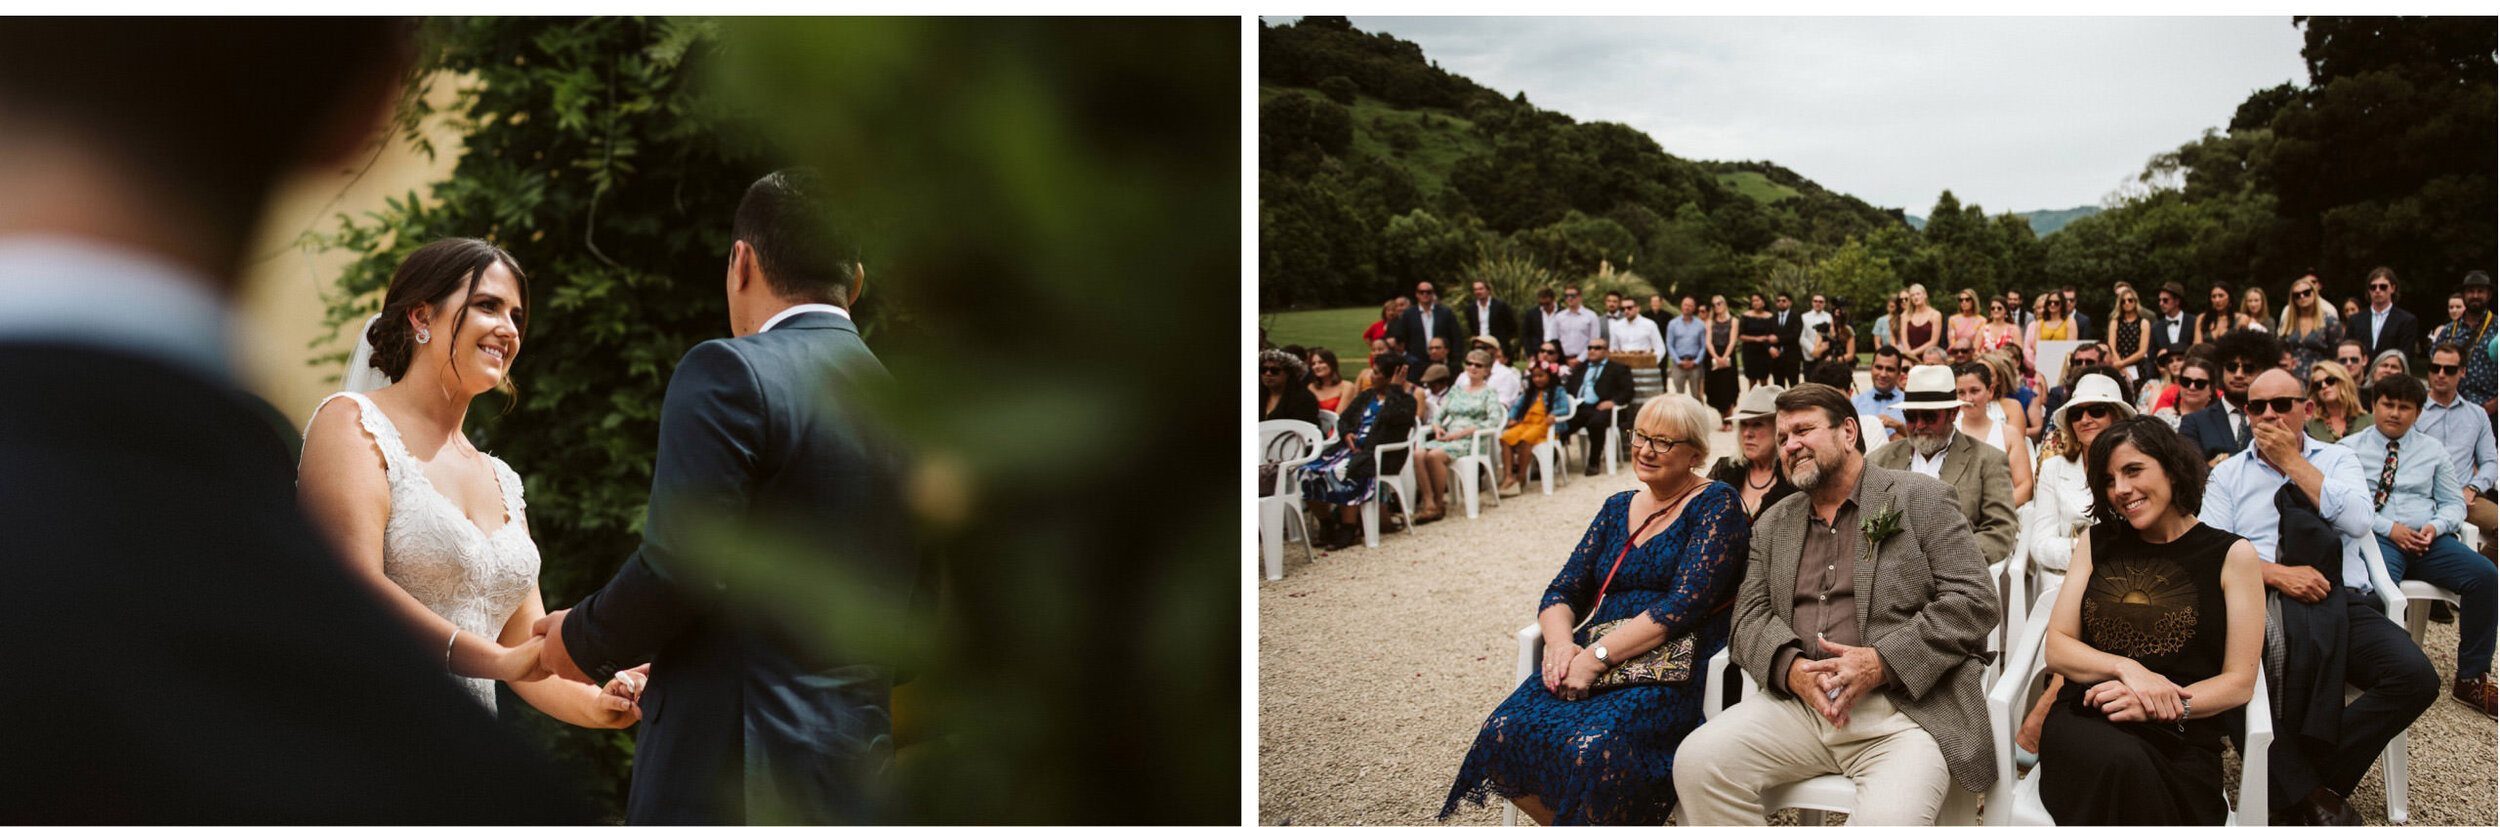 Akaroa-Wedding-Photographer-French-Farm-031.jpg